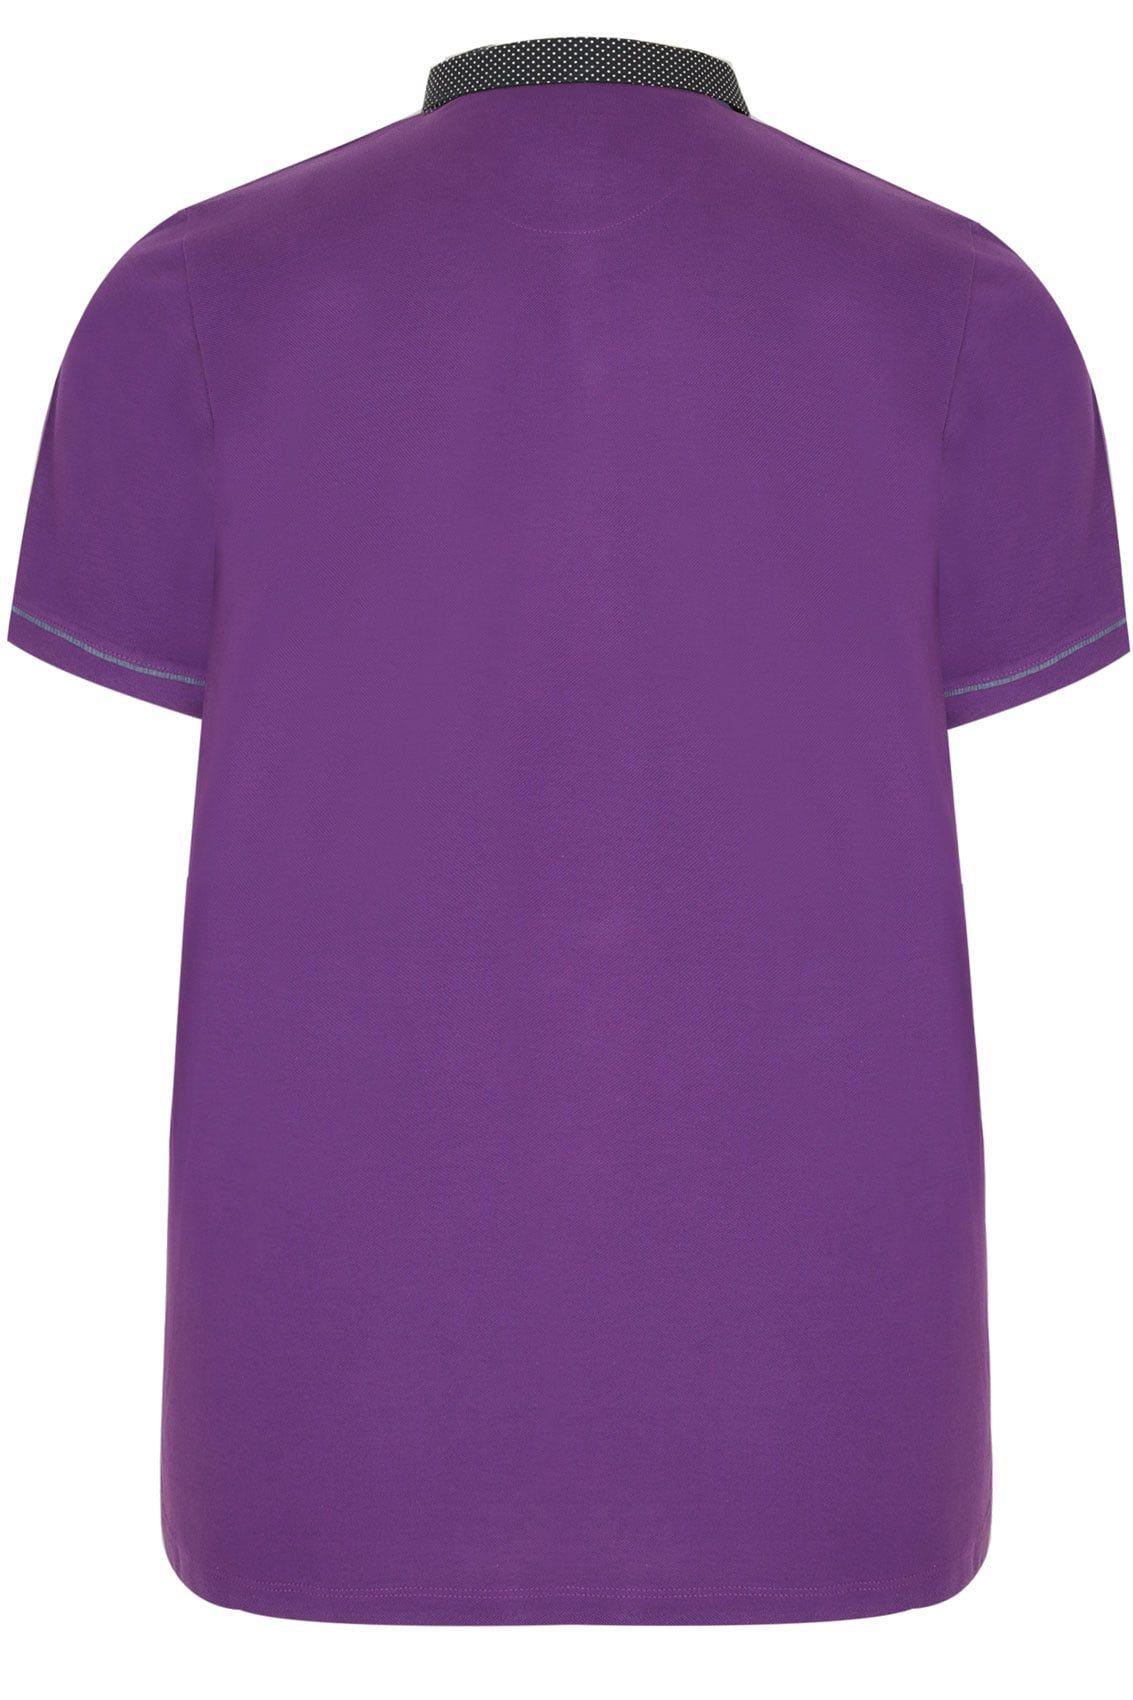 Lavender Polo Logo - Purple Polo Shirt With Contrast Polka Dot Collar & Pocket Trim Size